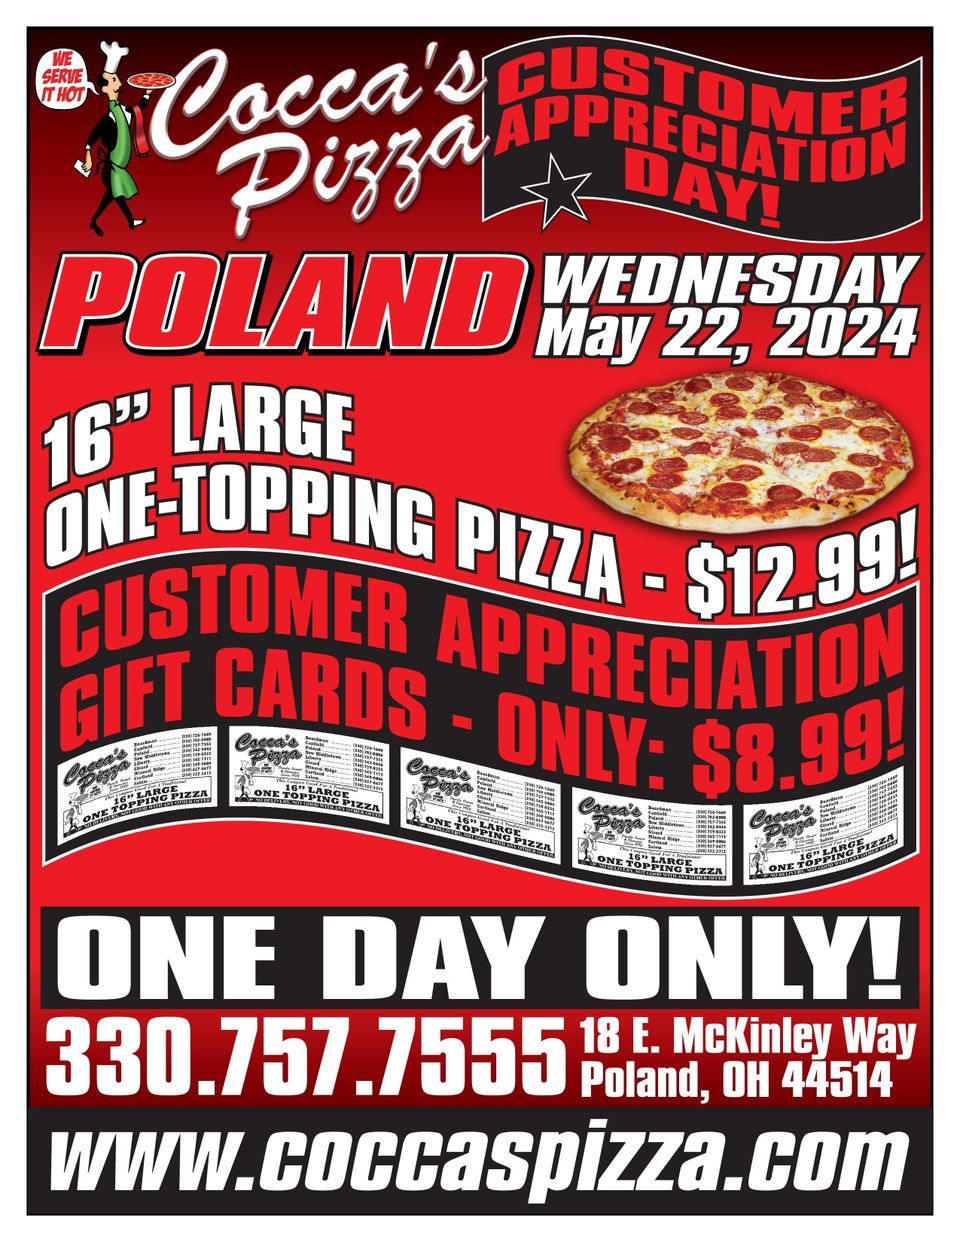 Proofs   coccas pizza customer appreciation flyers 00004